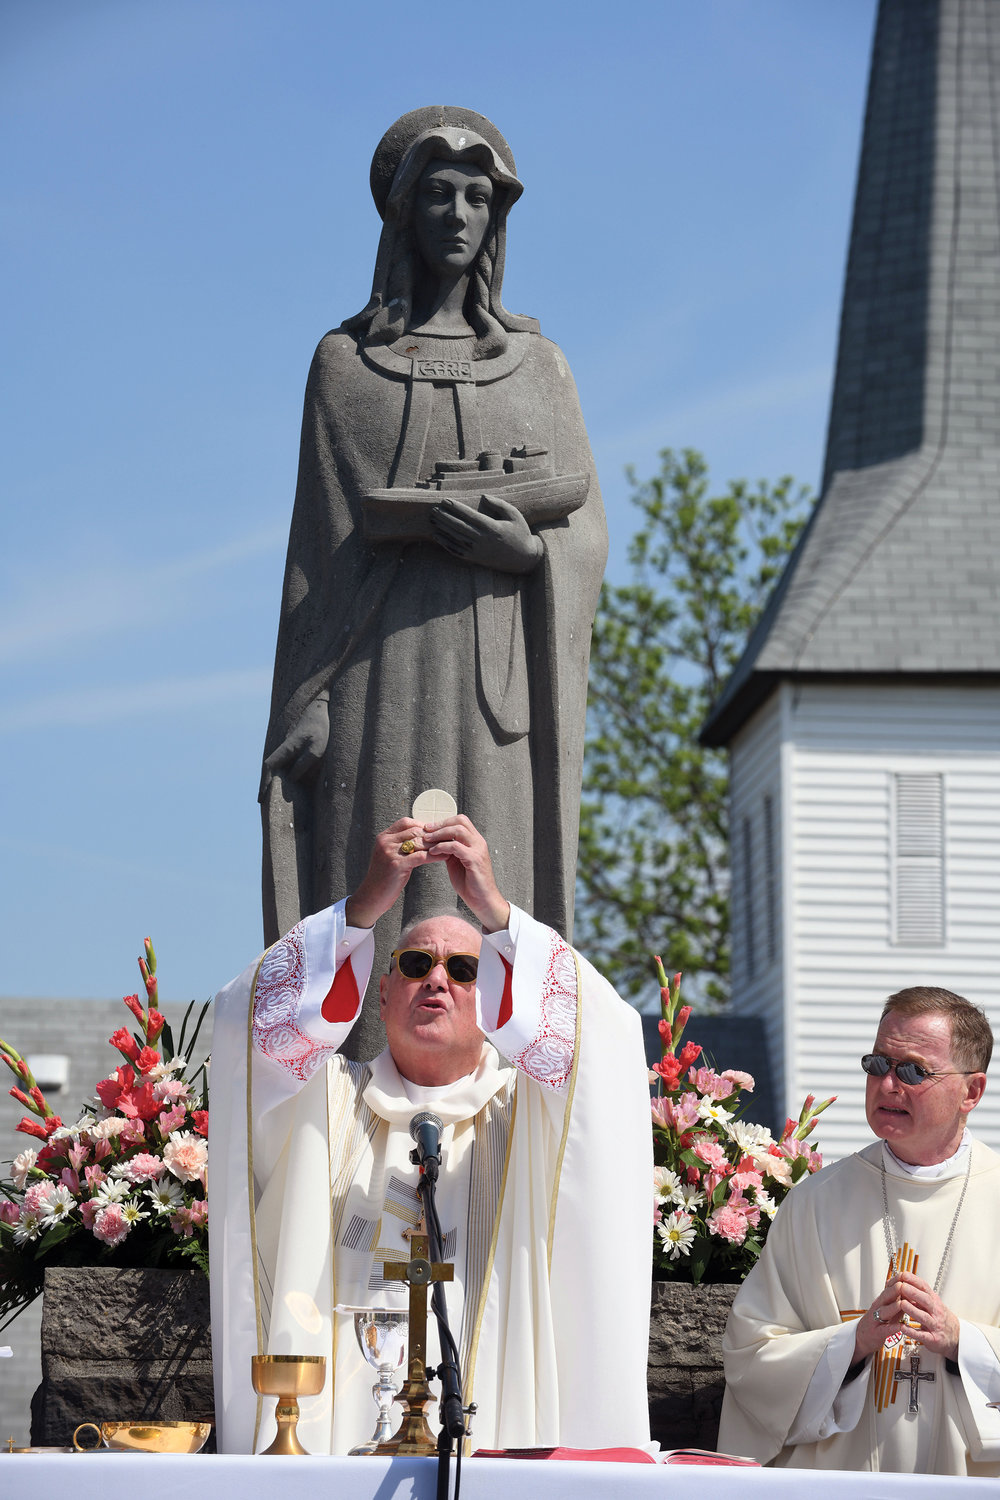 Cardinal Dolan elevates the Eucharist.